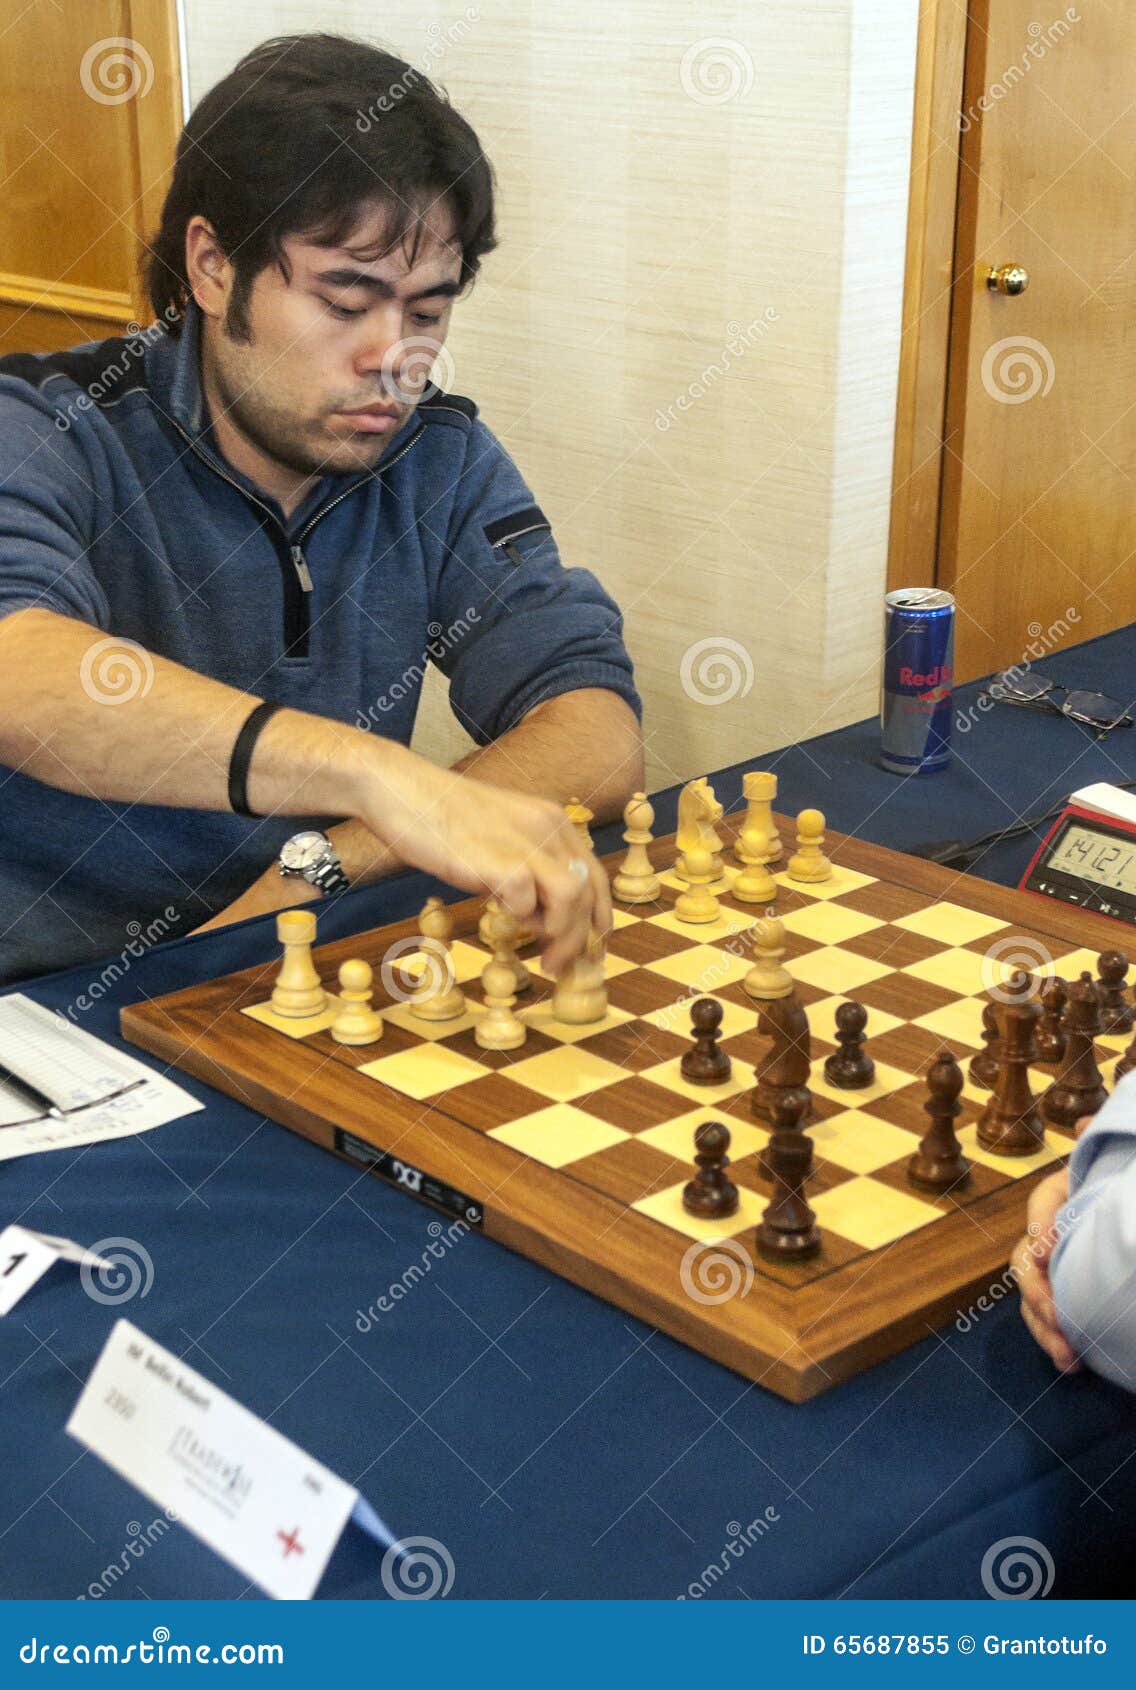 I'm GM Hikaru Nakamura, #1 US chess player and top 10 in the world - AMA :  r/IAmA